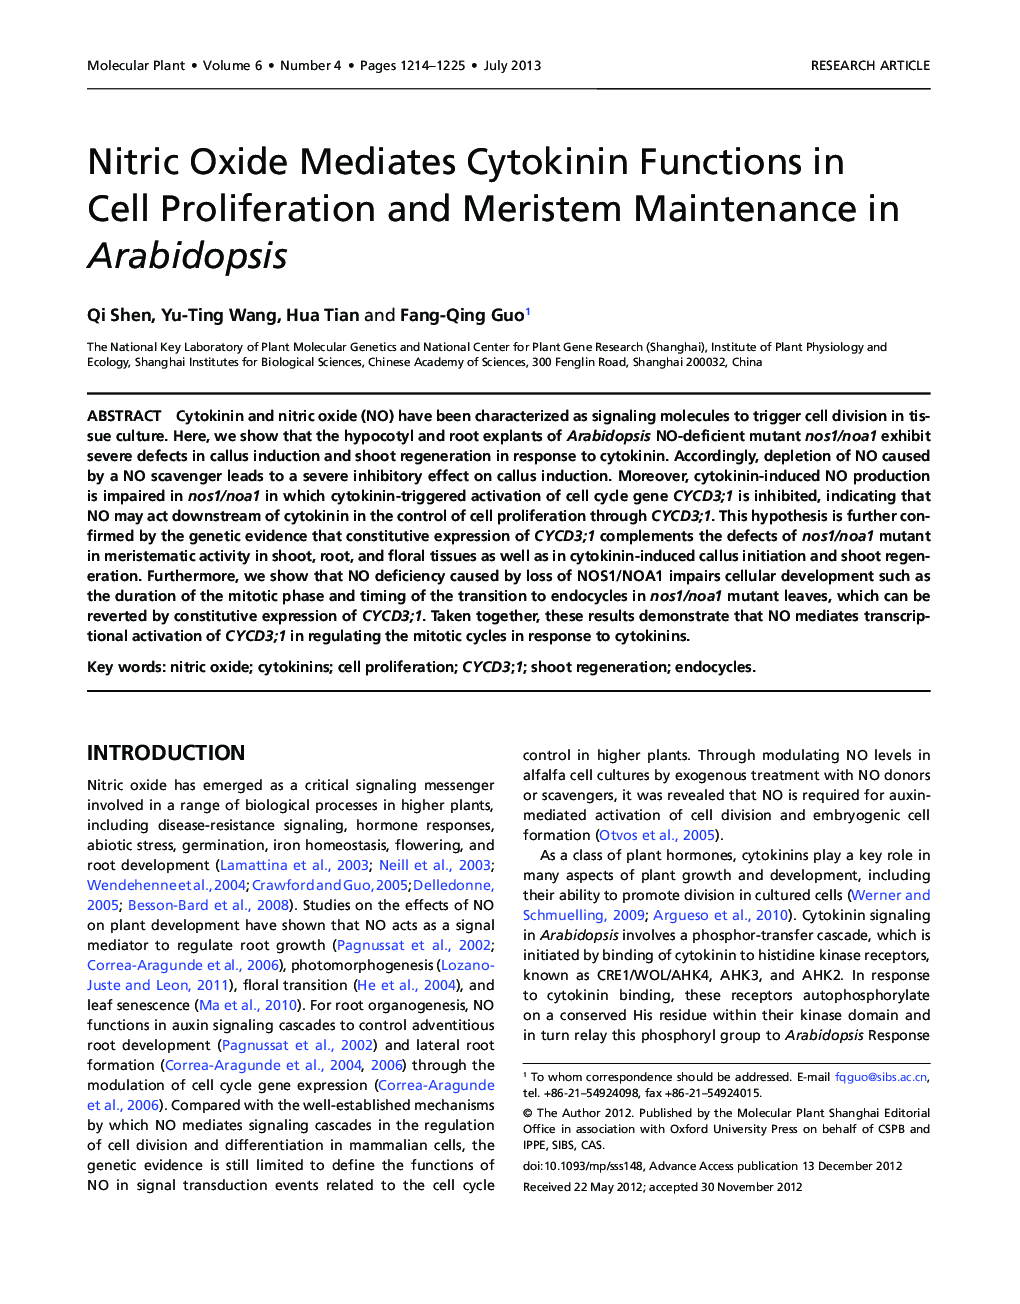 Nitric Oxide Mediates Cytokinin Functions in Cell Proliferation and Meristem Maintenance in Arabidopsis 